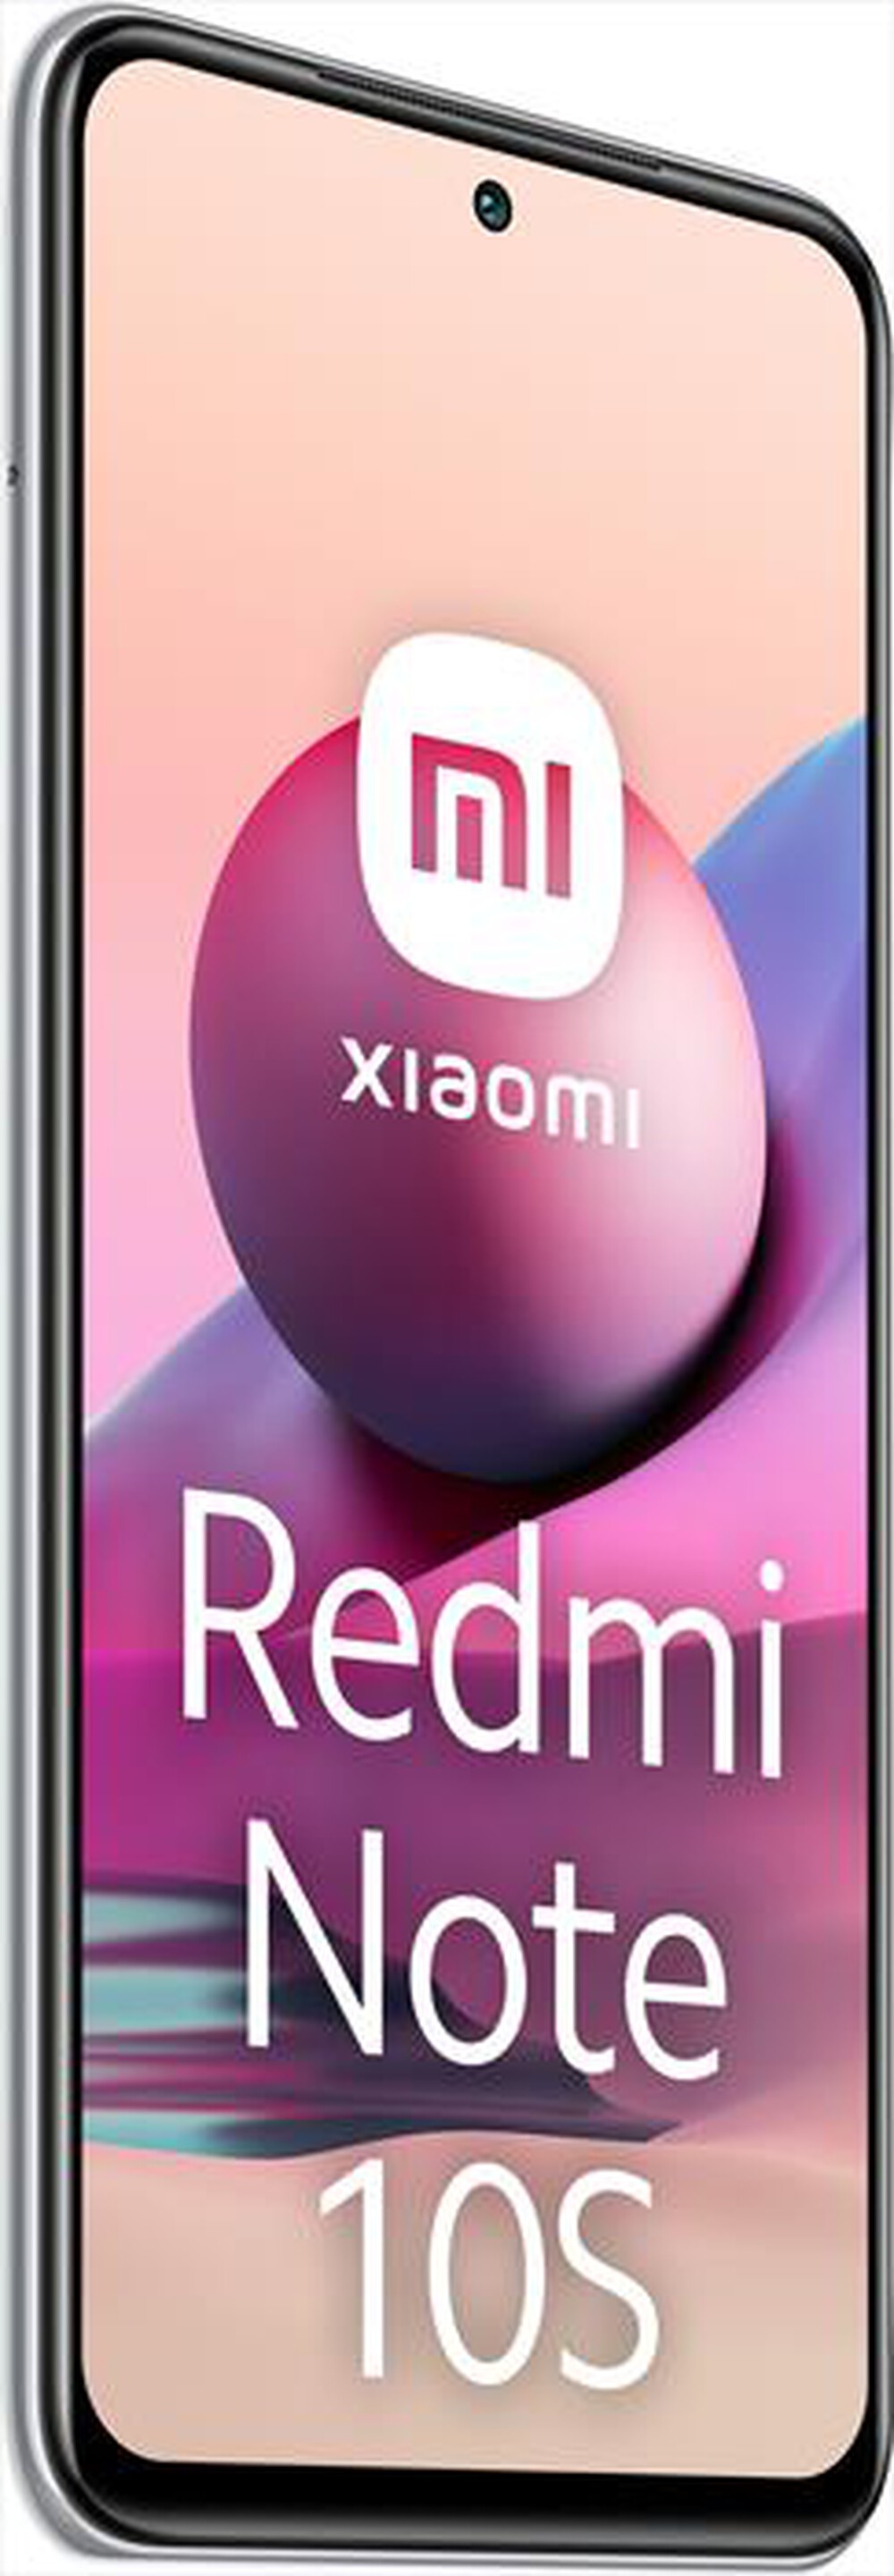 "XIAOMI - REDMI NOTE 10S 6+128GB-Pebble White"